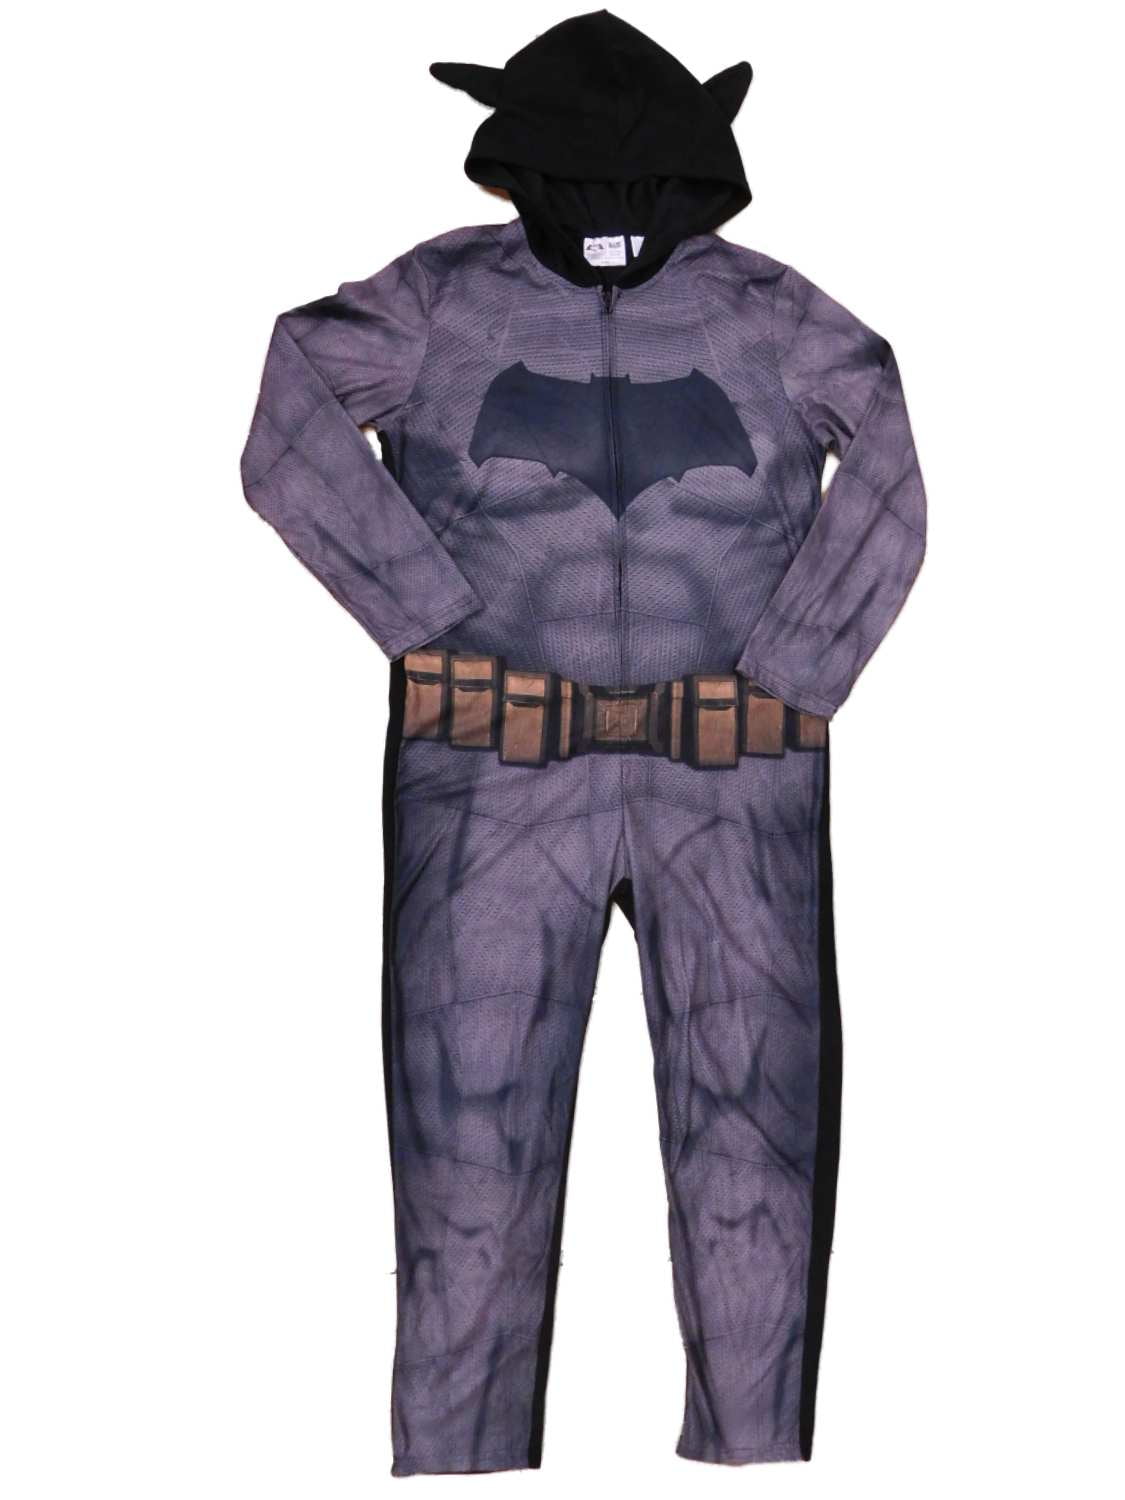 DC Comics Batman OR Superman Hooded all in one body suit/fleece/romper Sleepsuit 